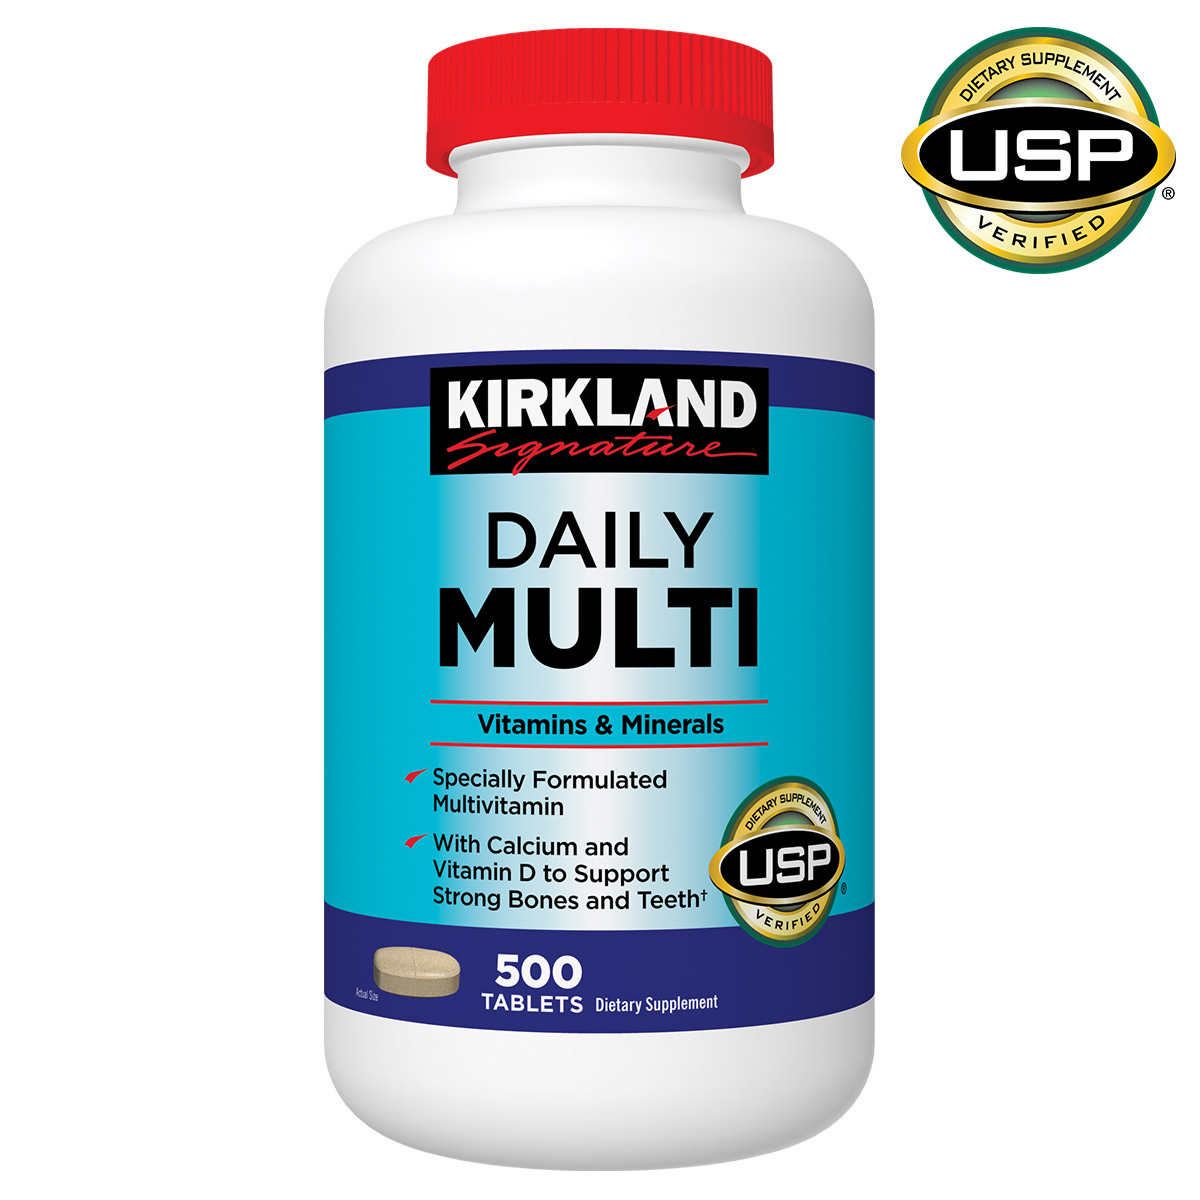 Vitamin tổng hợp Kirkland Daily Multi Vitamin & Minerals 500 viên của Mỹ